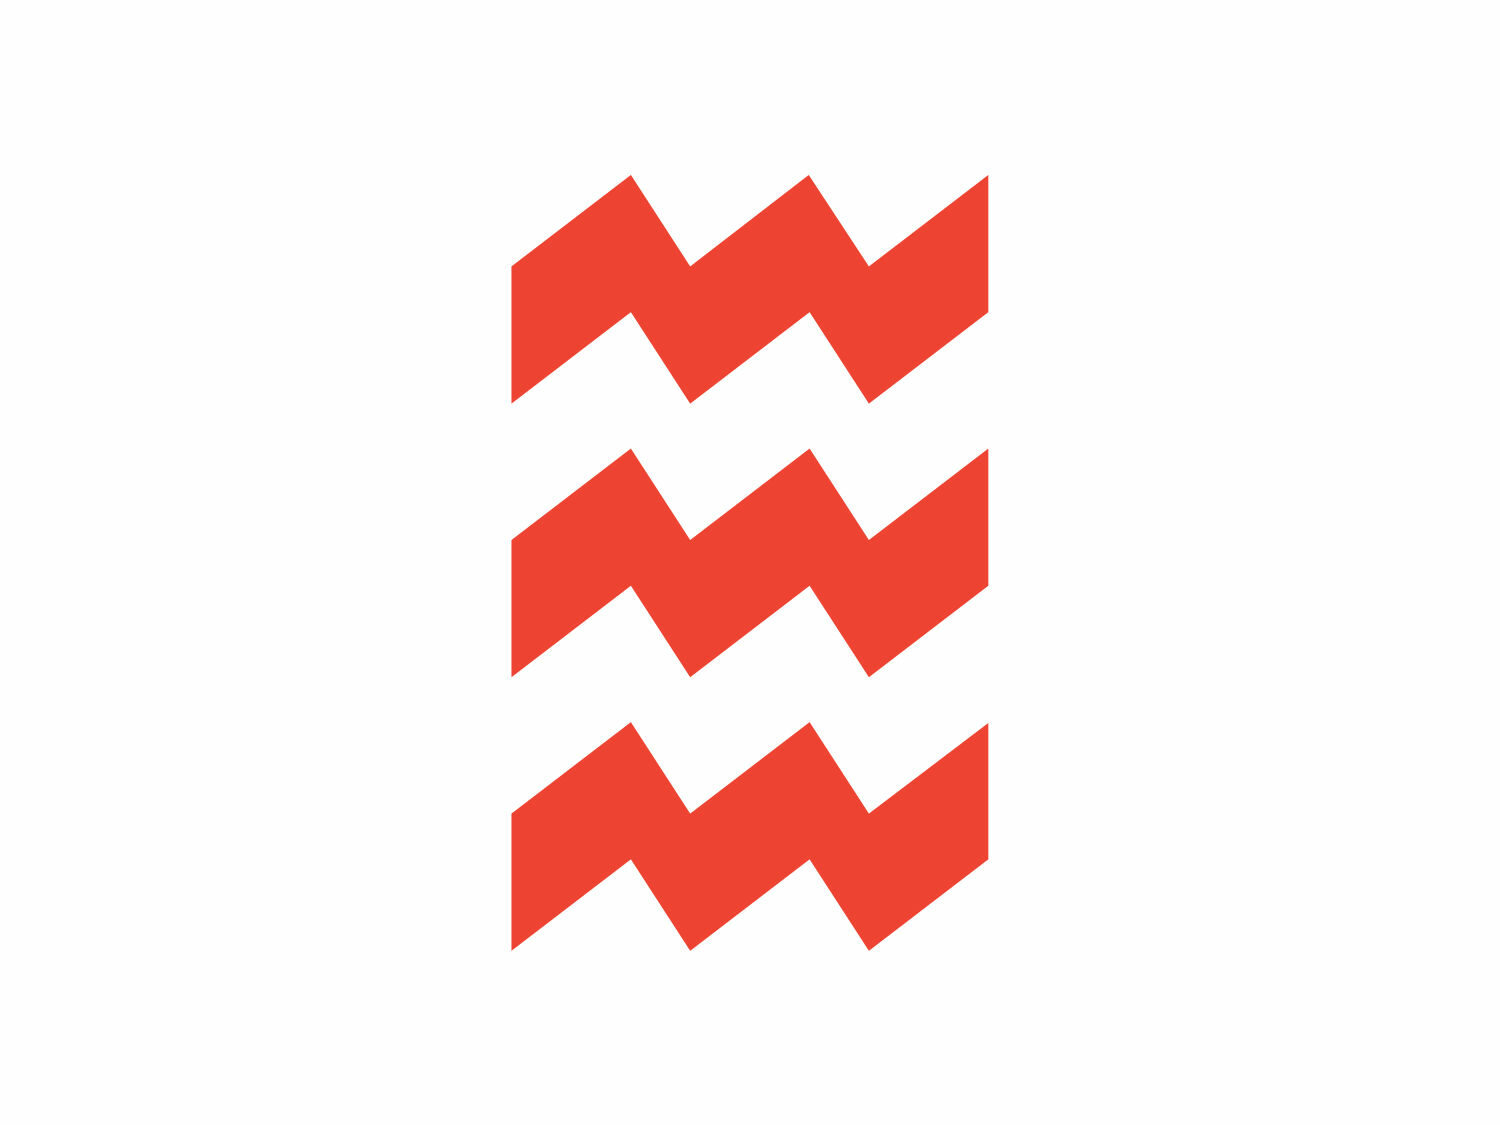 Eindhoven Logo / Bildmarke